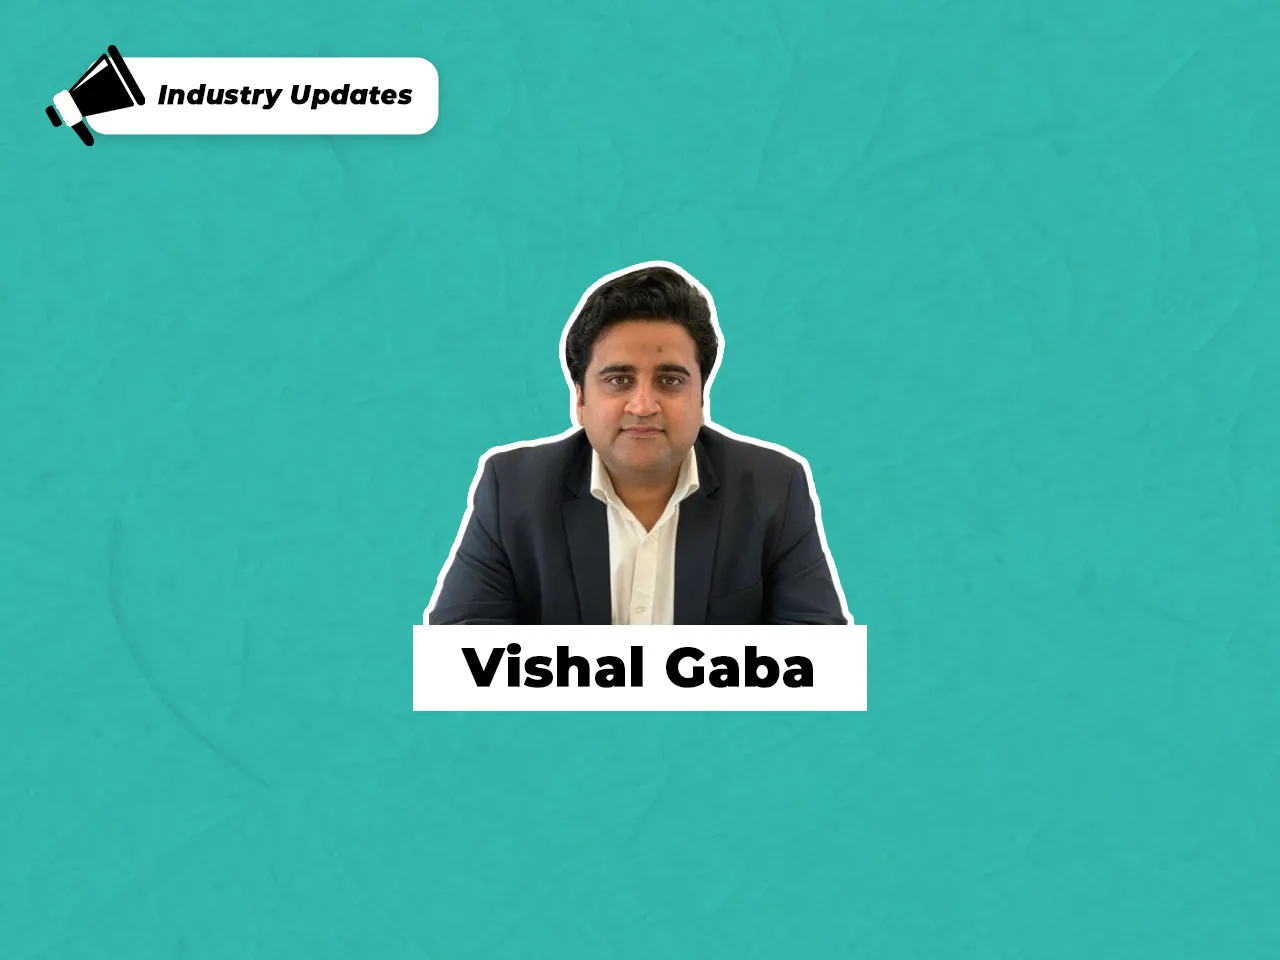 Vishal Gaba moves on from Bira 91